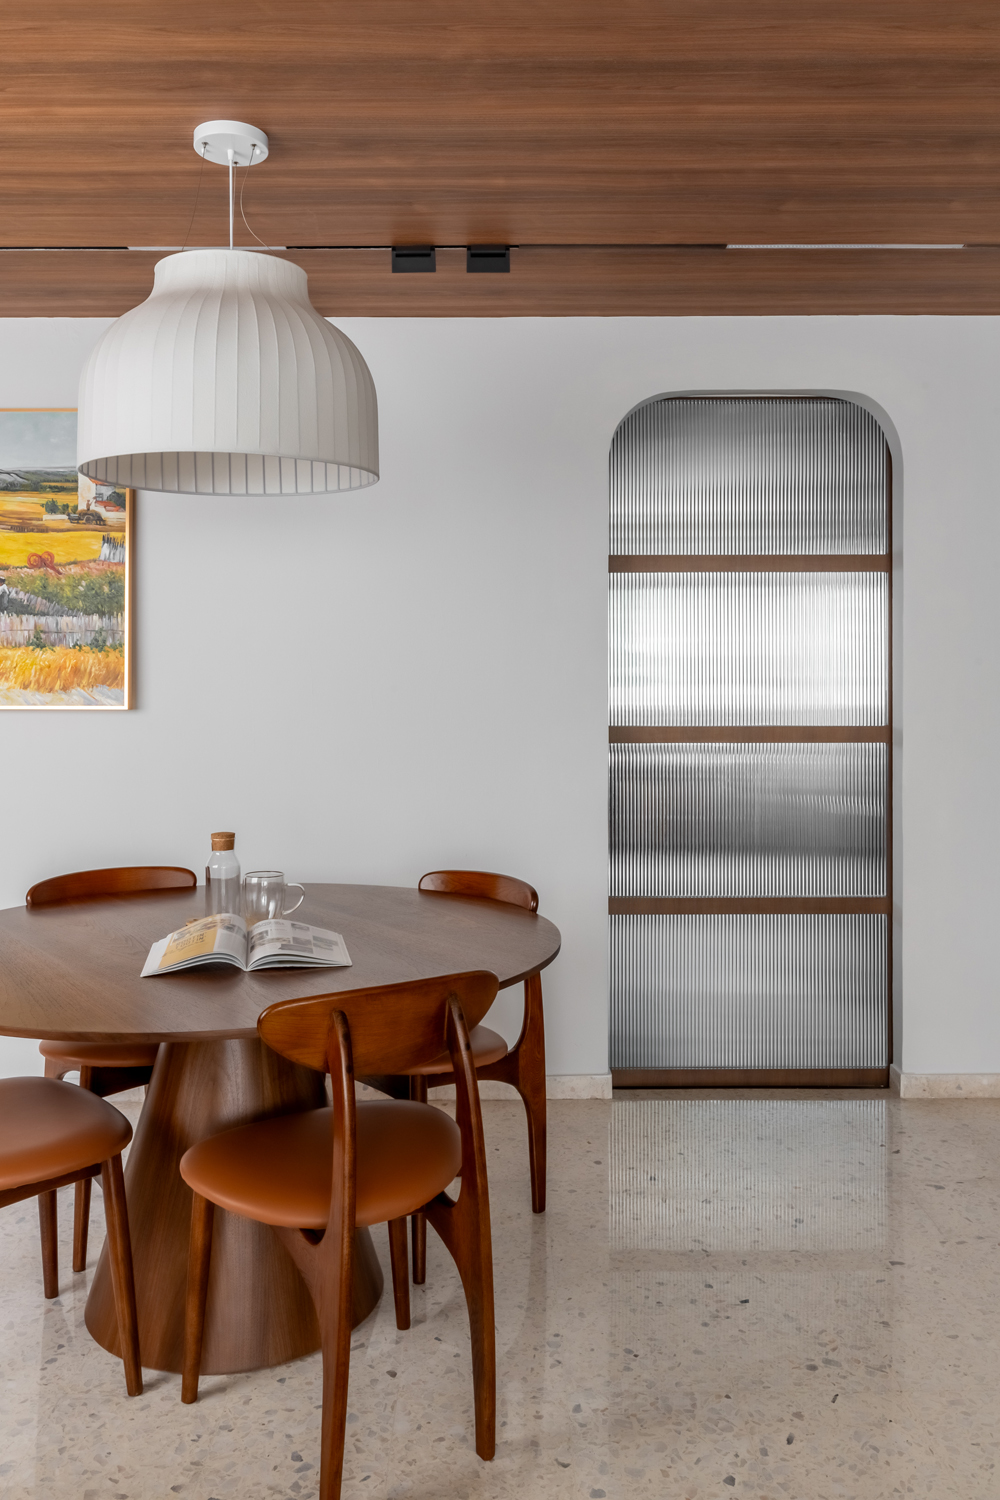 Industrial, Others, Scandinavian Design - Dining Room - HDB 4 Room - Design by U-Home Interior Design Pte Ltd